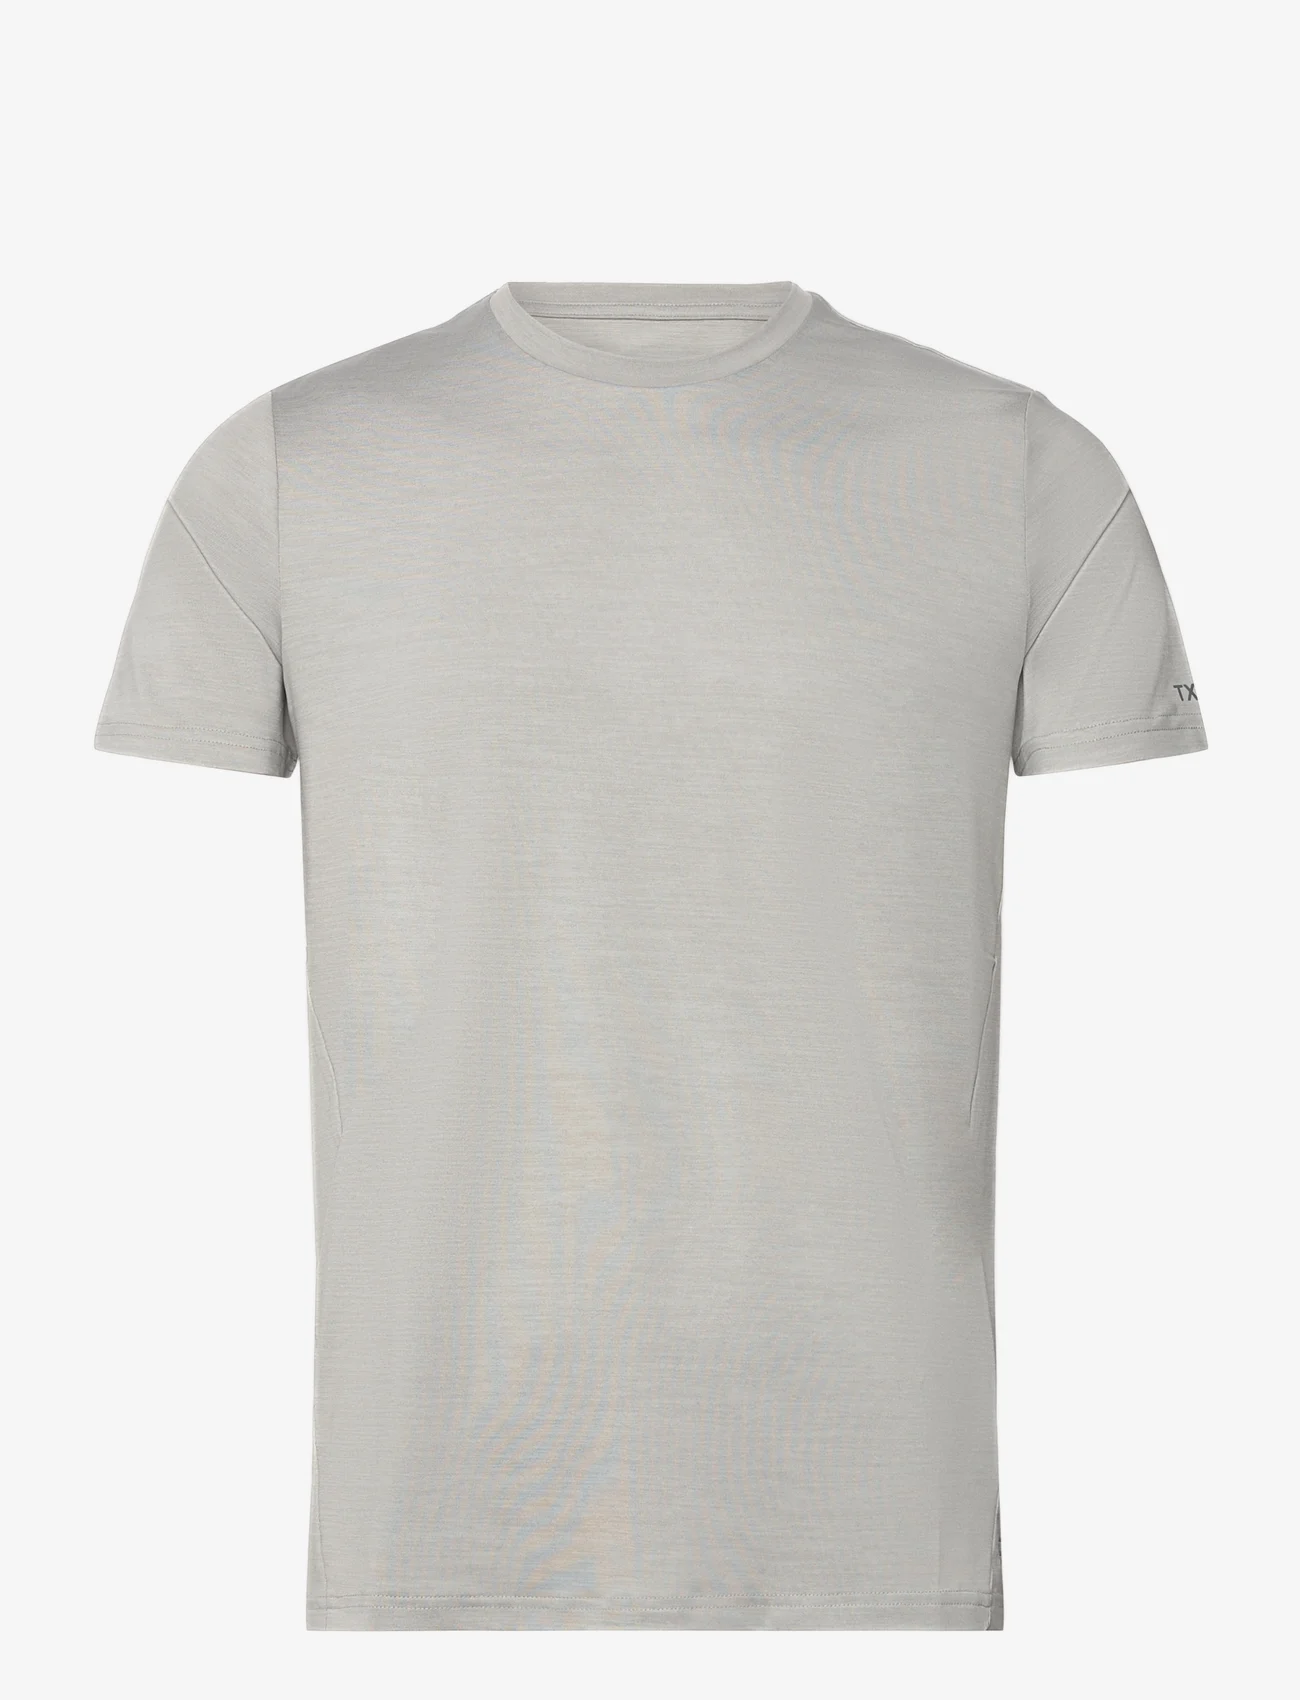 Tenson - TXlite Tee M - short-sleeved t-shirts - light grey - 0